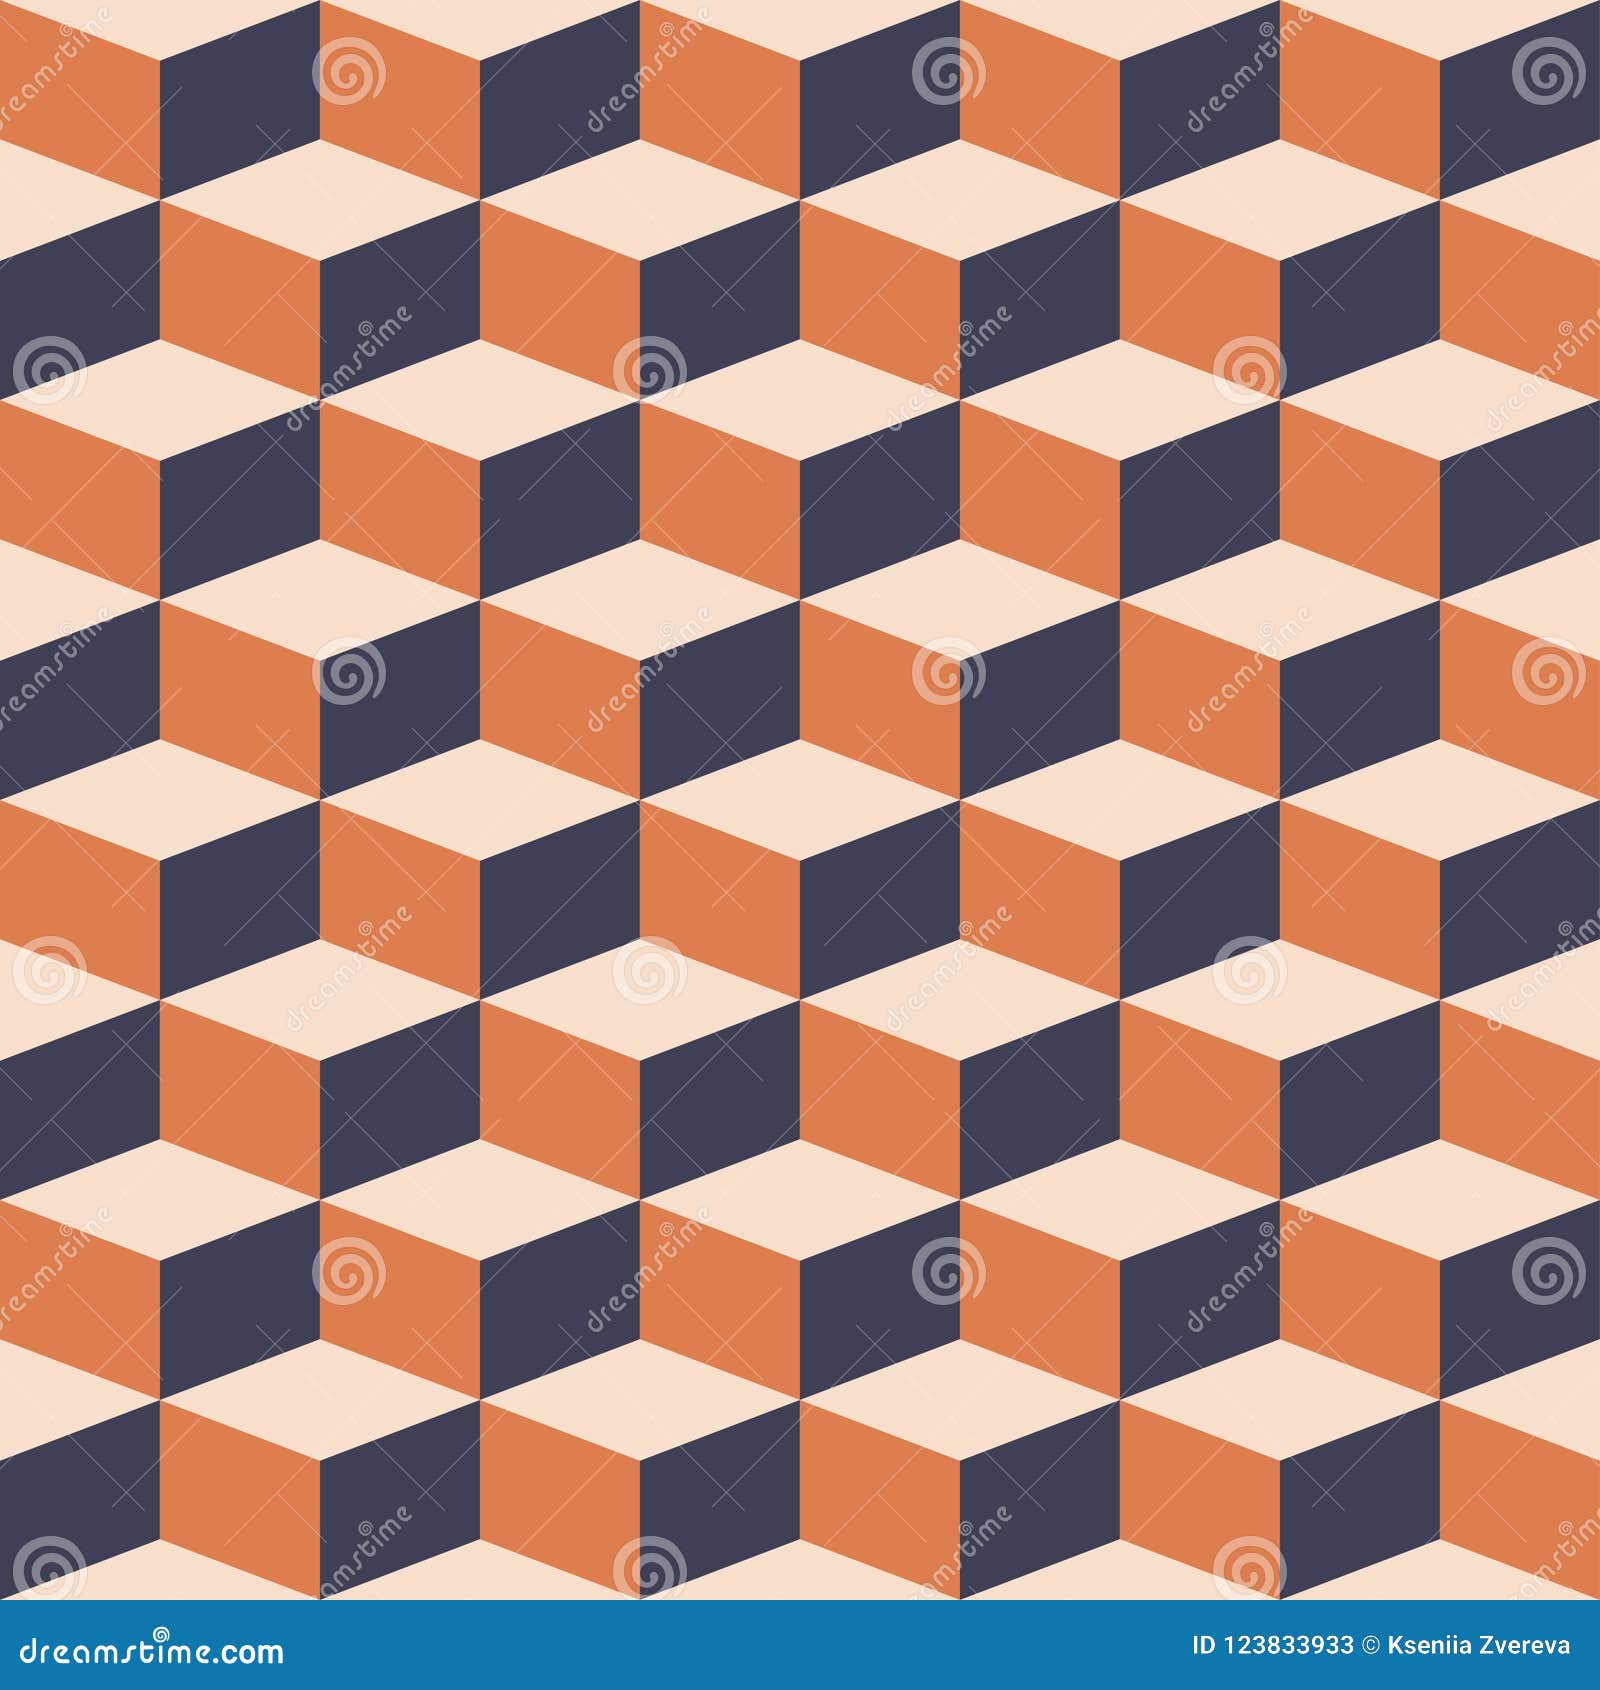 Abstract Blocks Visual Illusion Seamless Contrast Grey and Orange